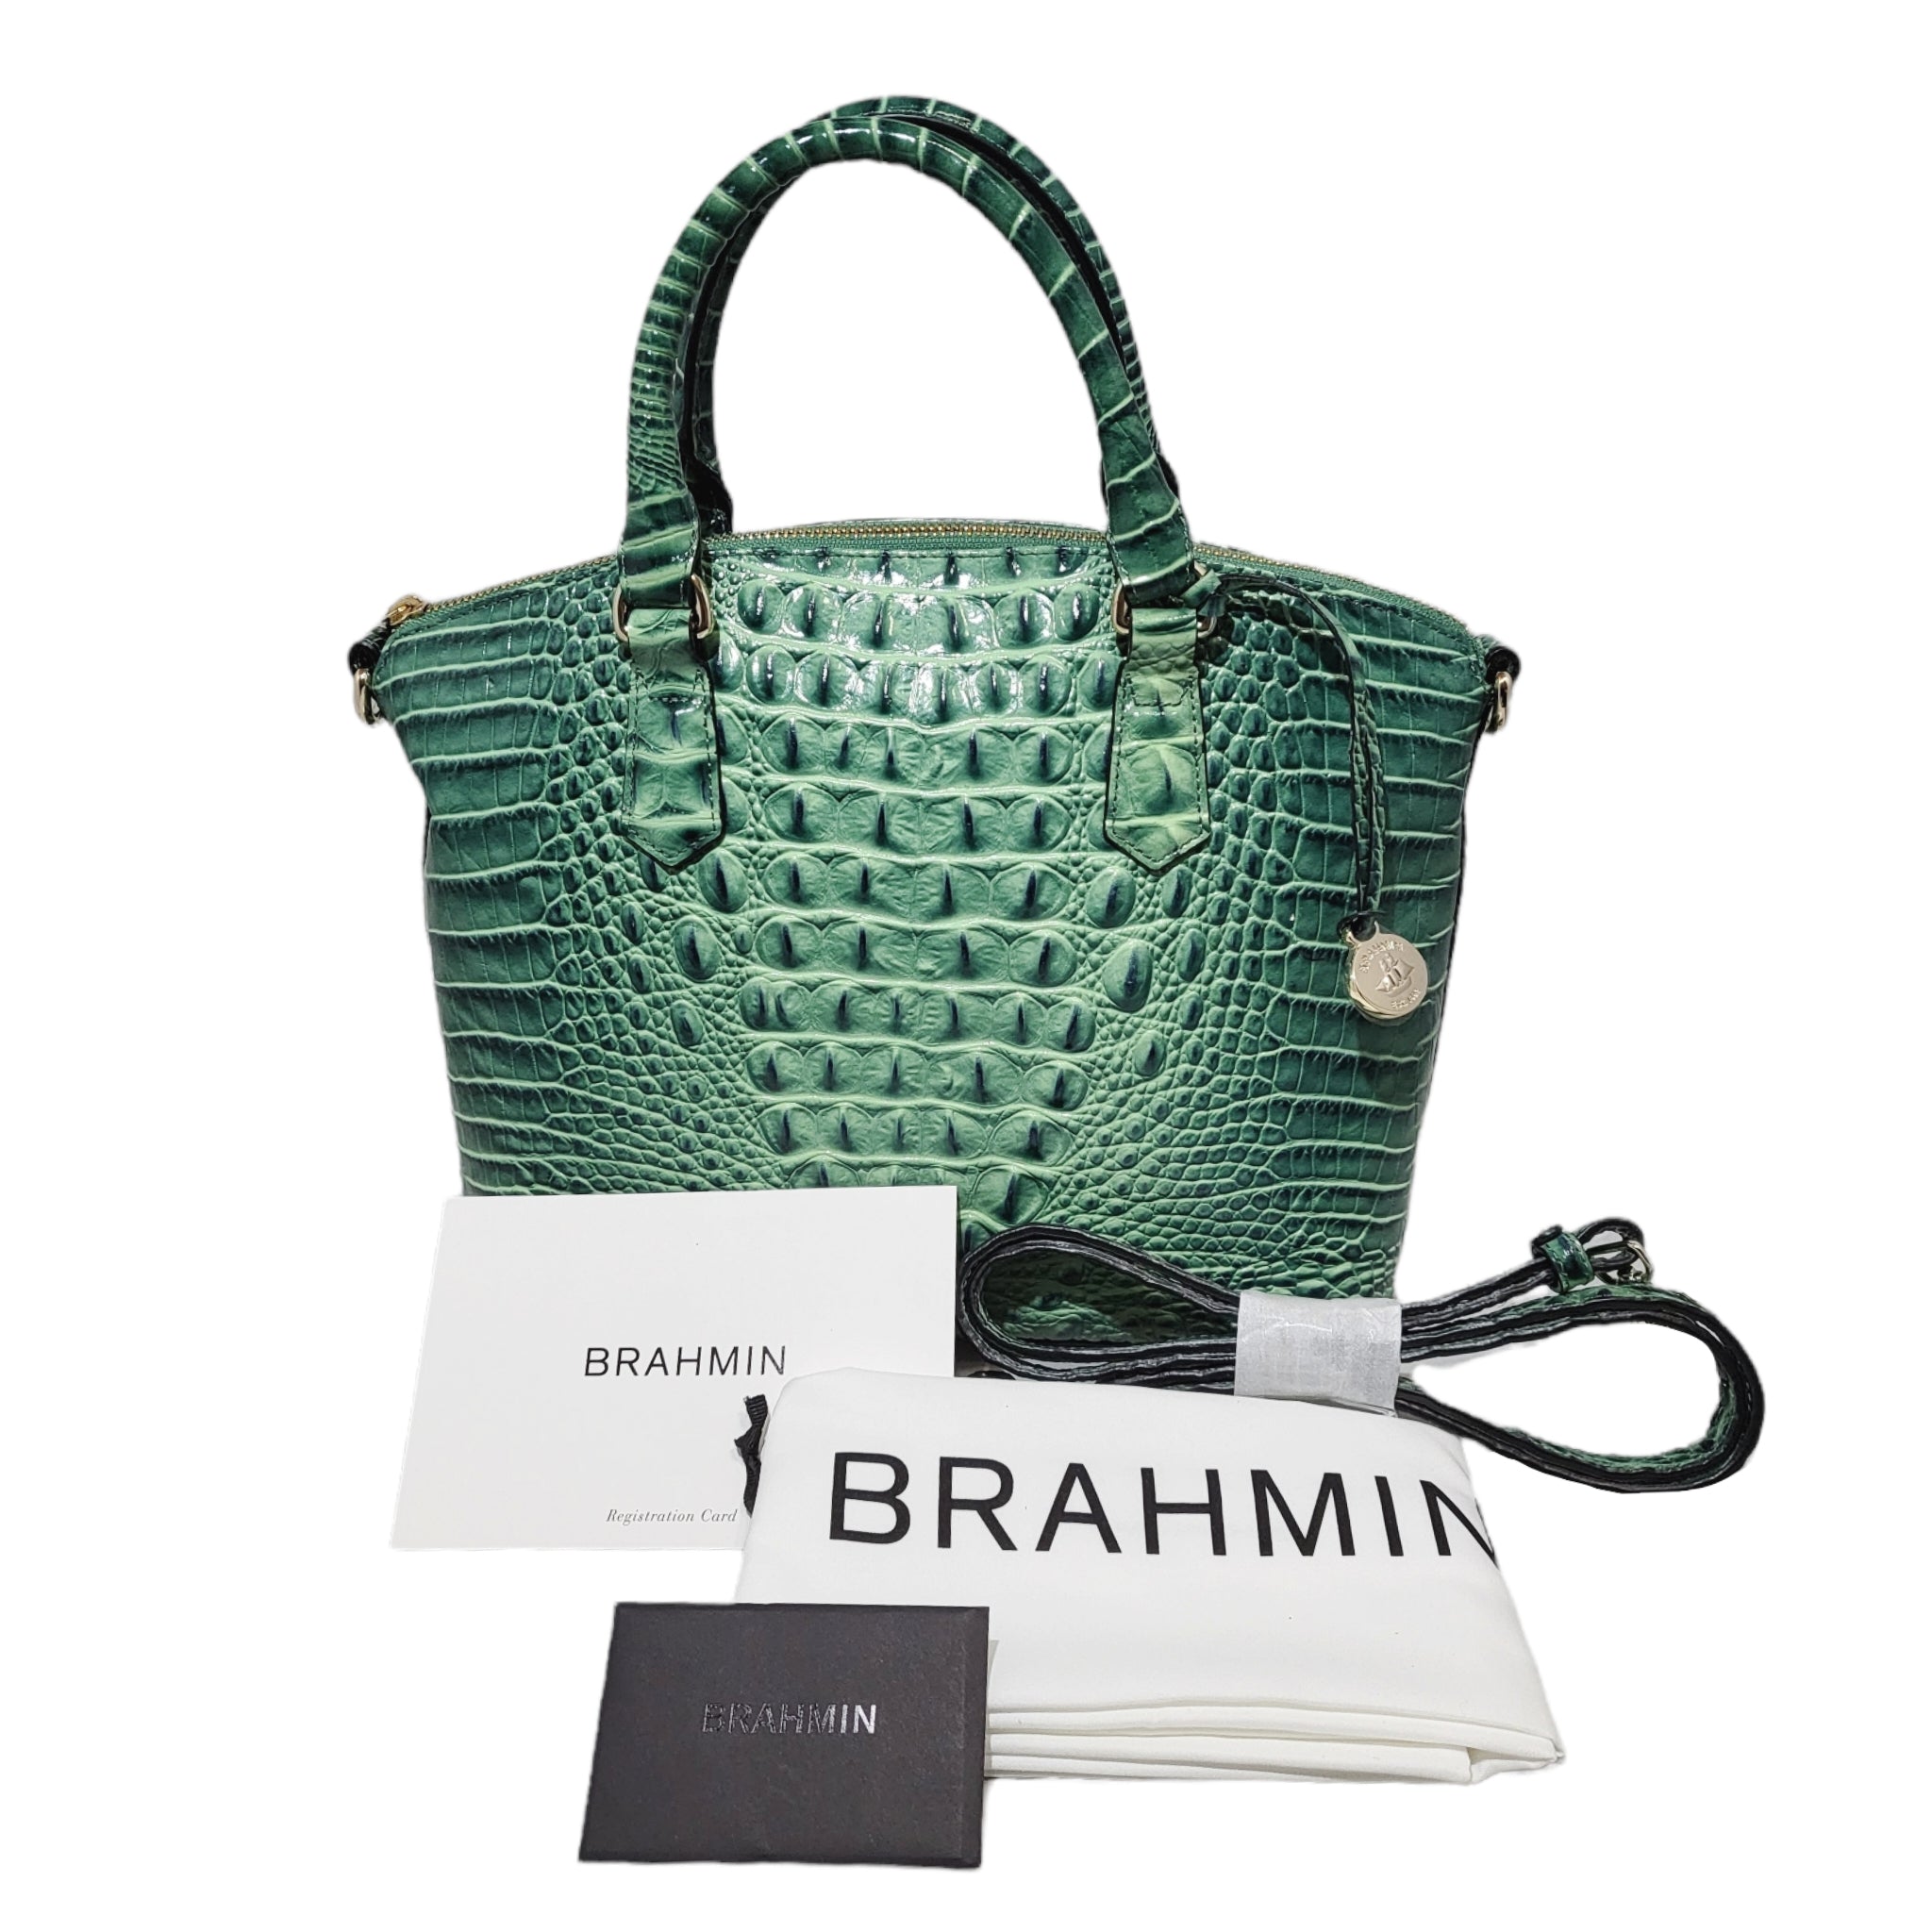 brahmin bag campaign - Google Search